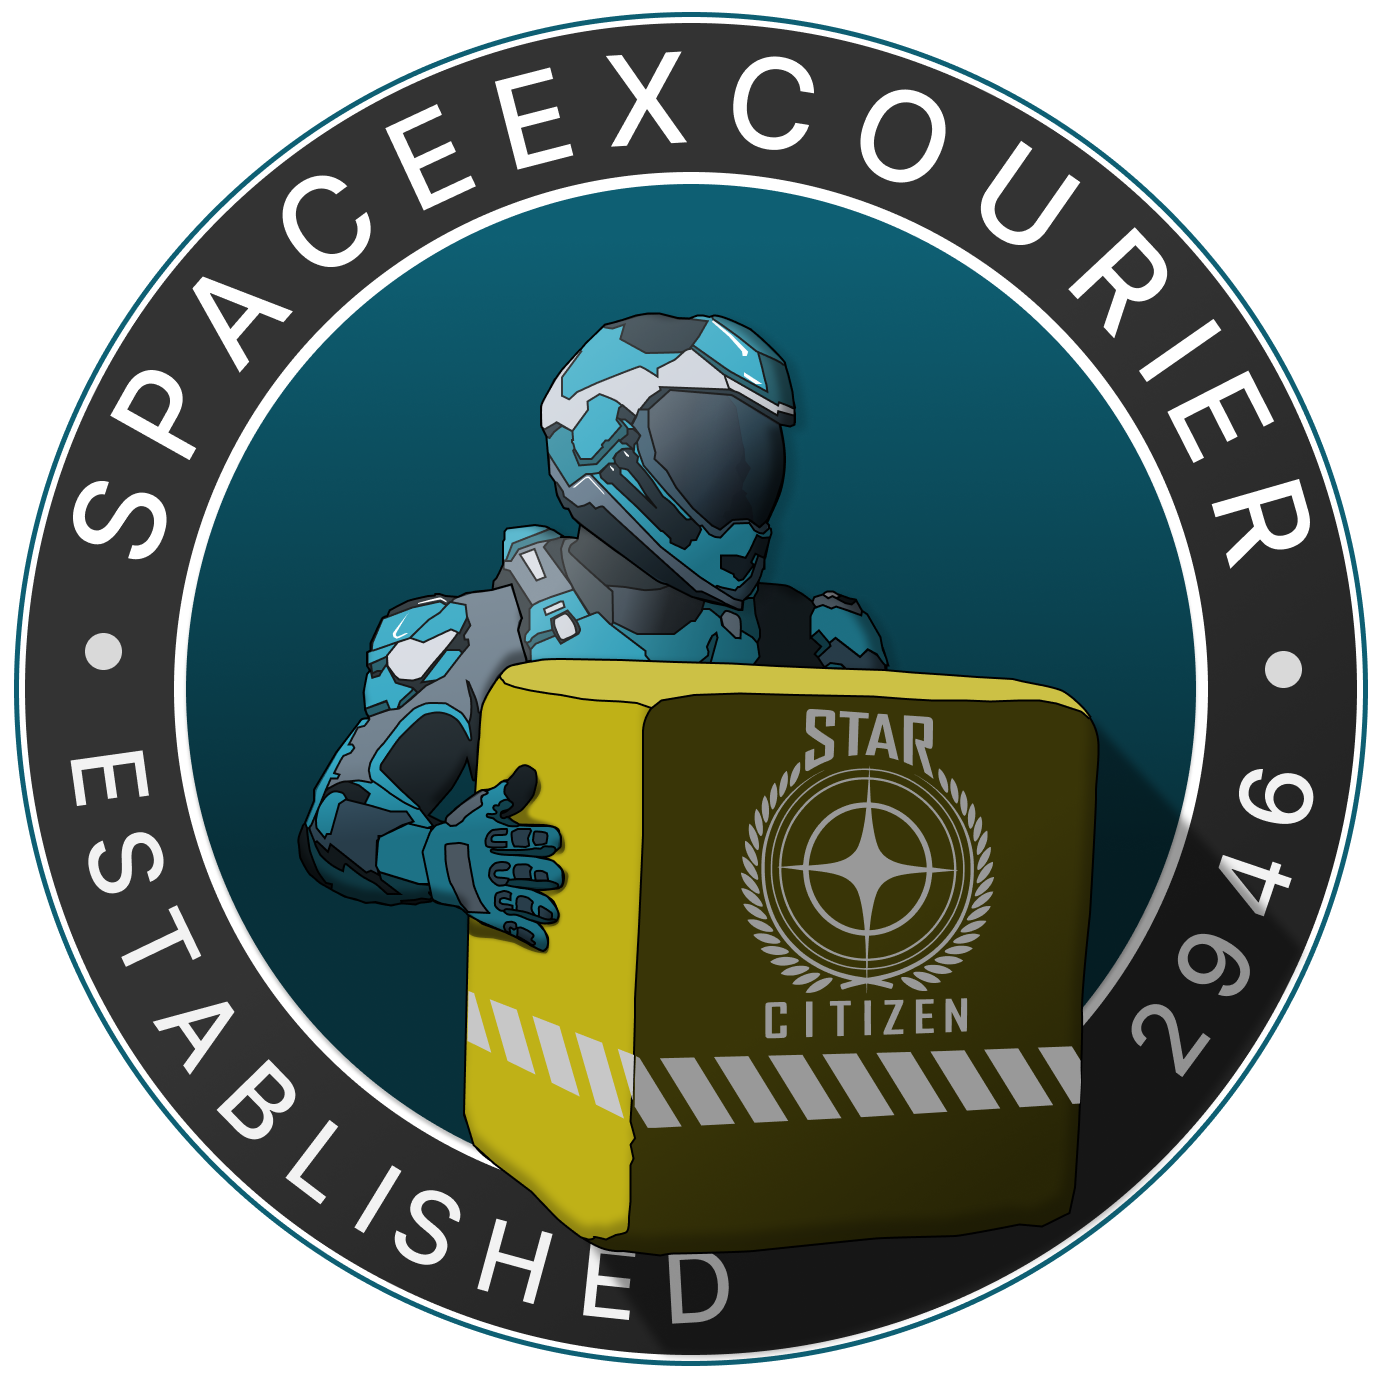 Space Ex Courier Logo